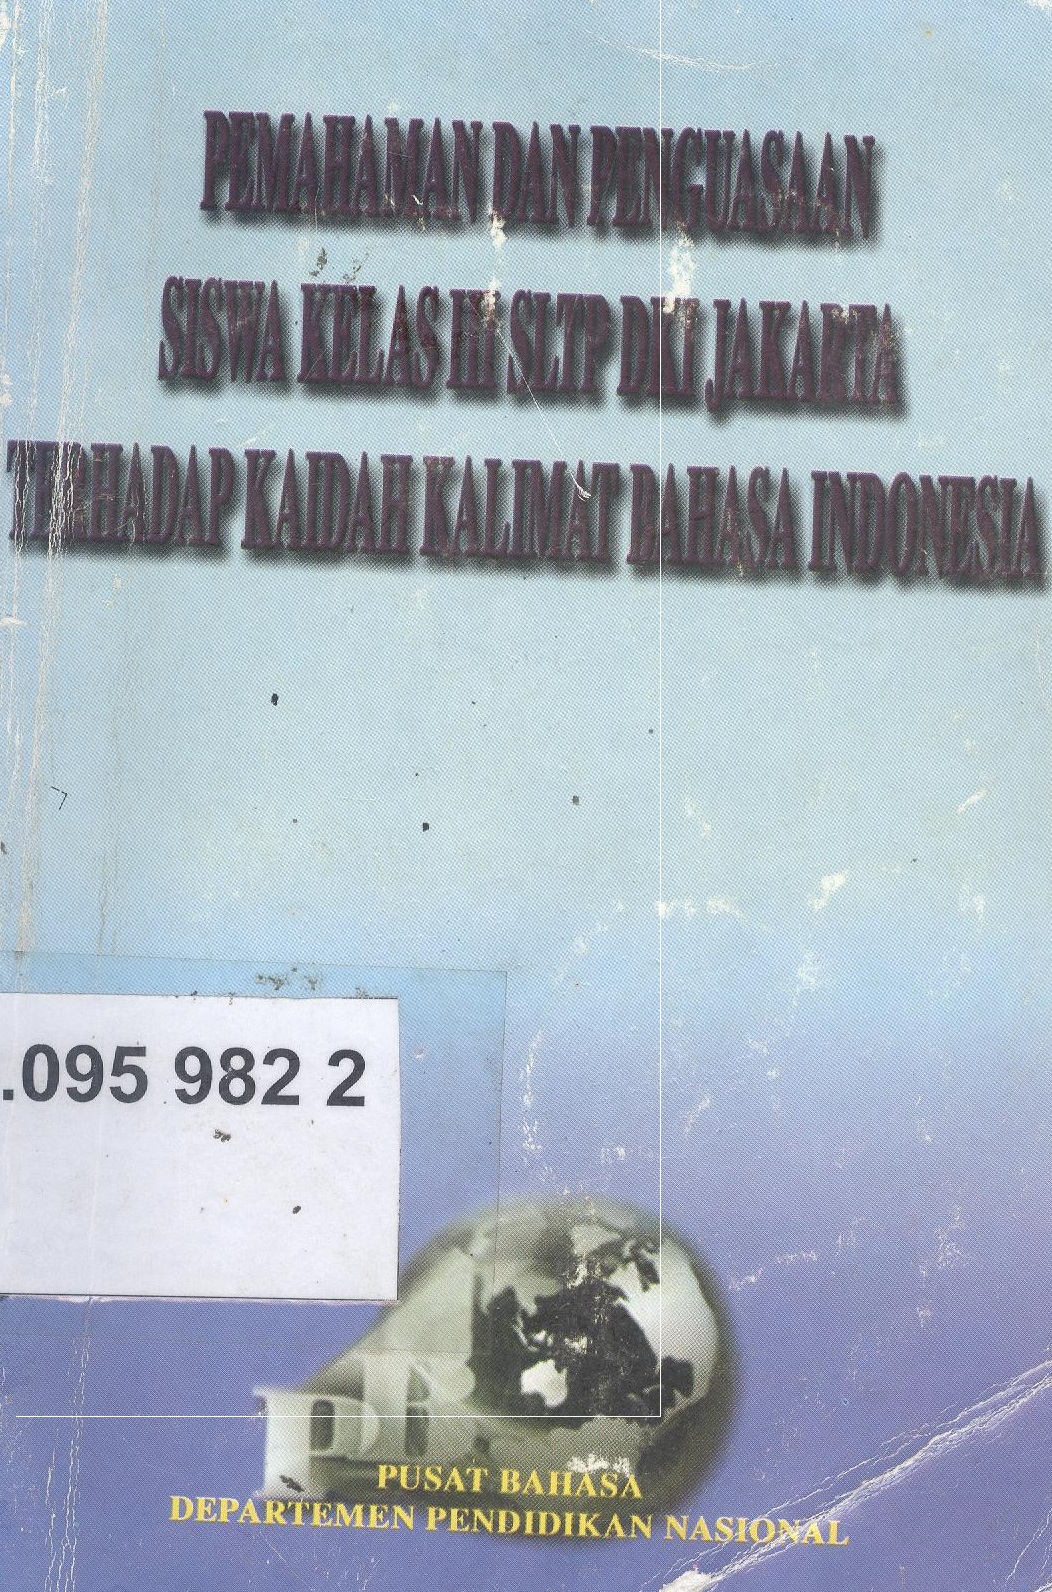 Pemahaman dan penguasaan siswa kelas III SLTP DKI Jakarta terhadap kaidah kalimat bahasa Indonesia